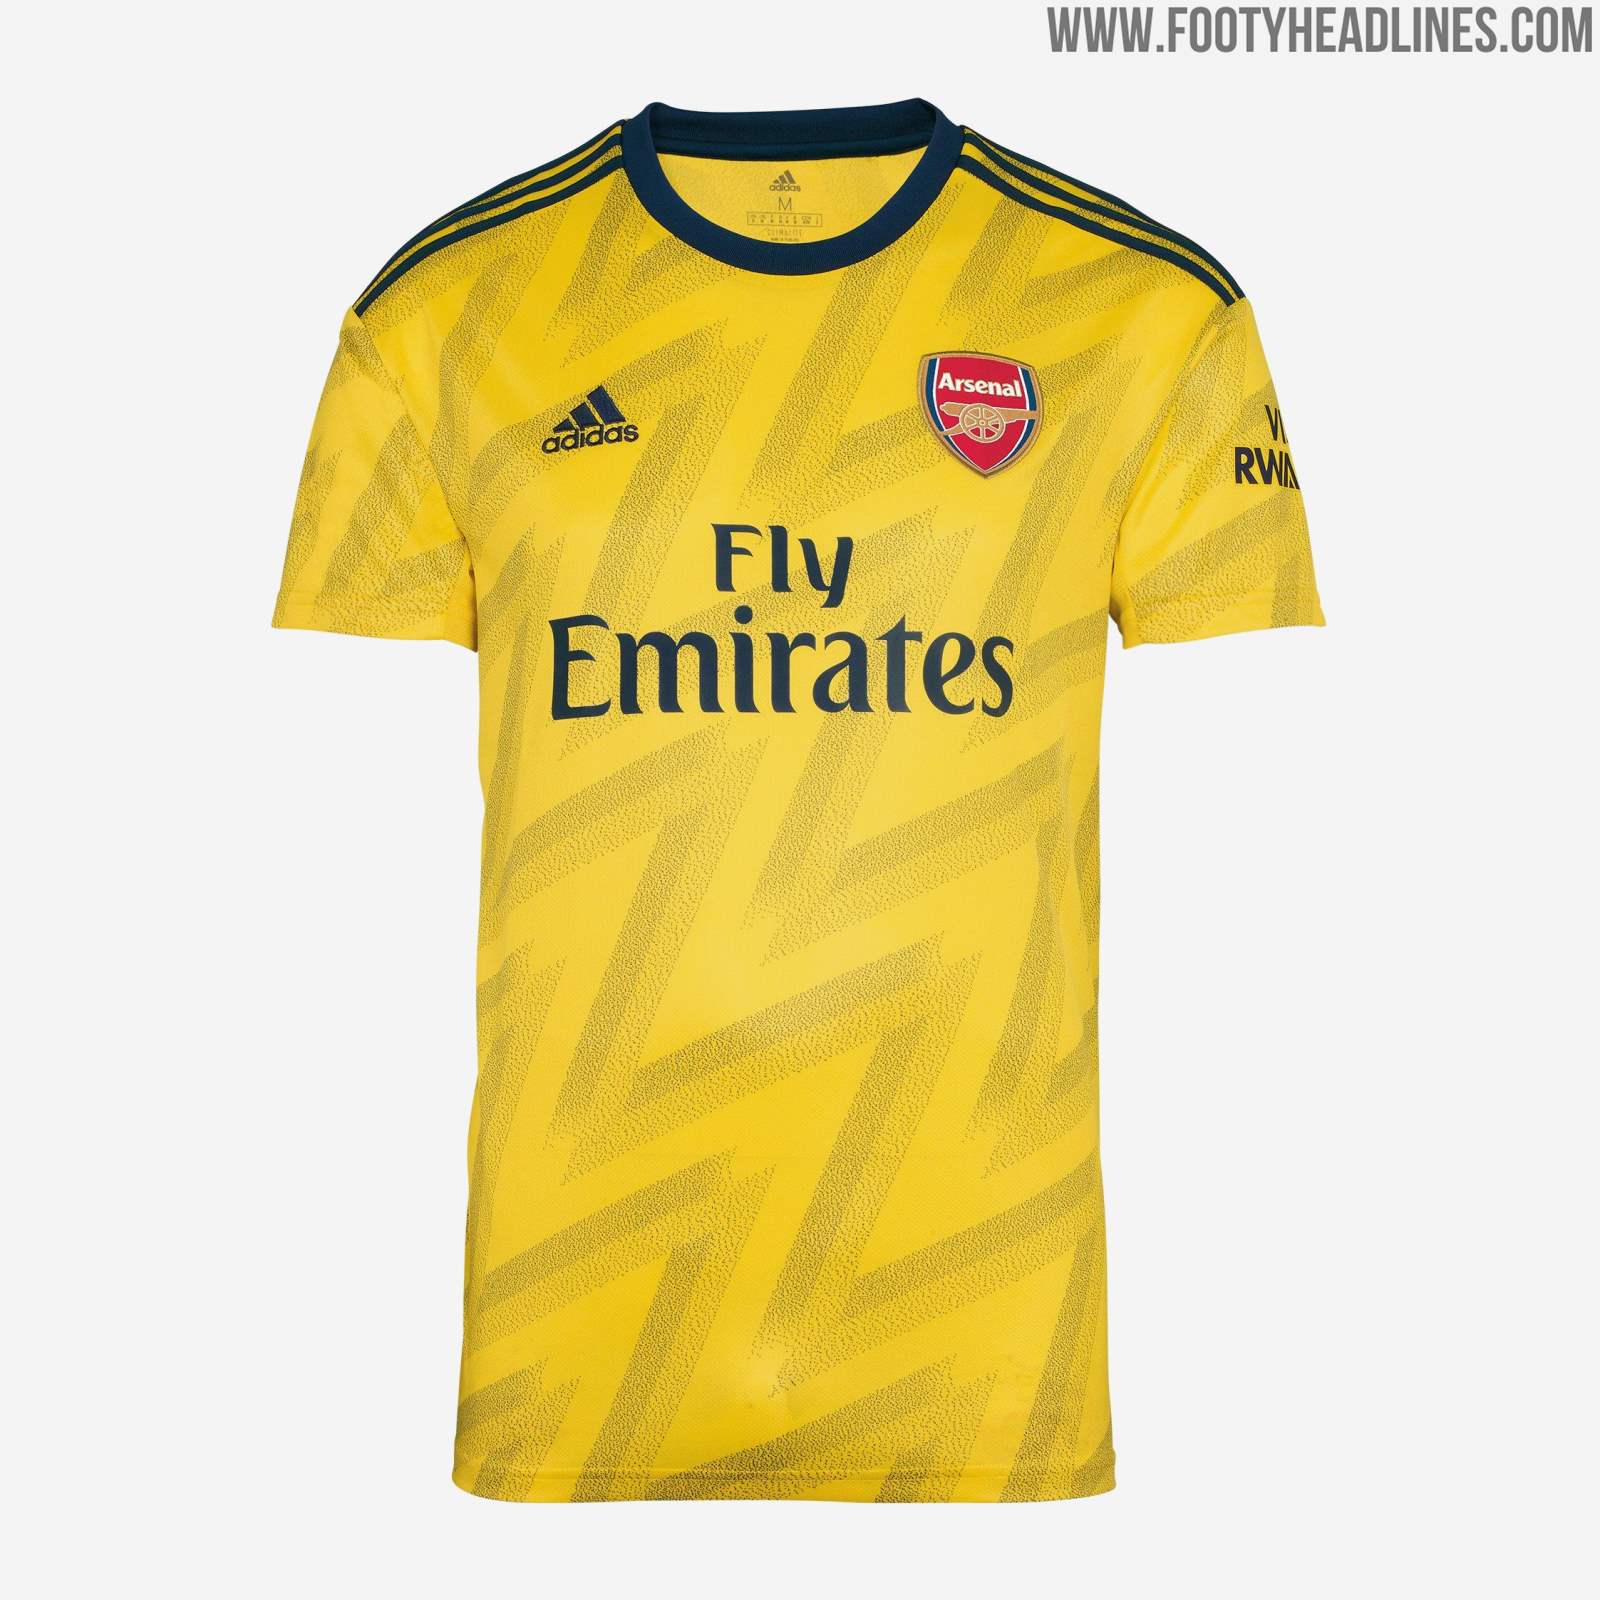 Arsenal 19-20 Away Kit Released - 'Bruised Banana' Headlines